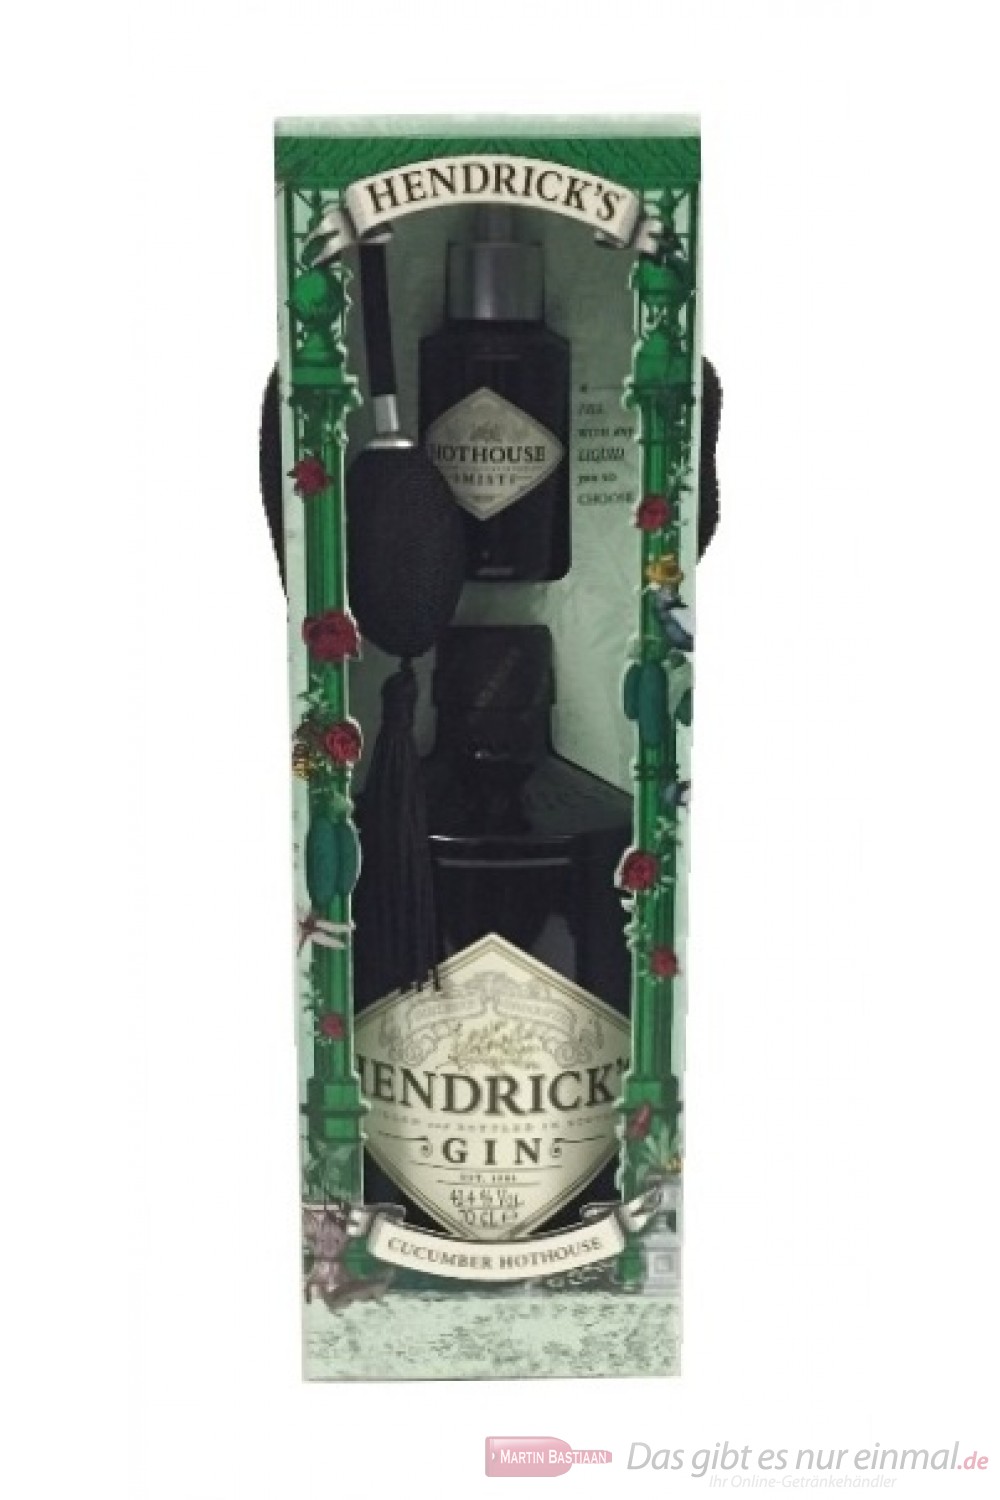 Hendricks Gin Cucumber Hothouse